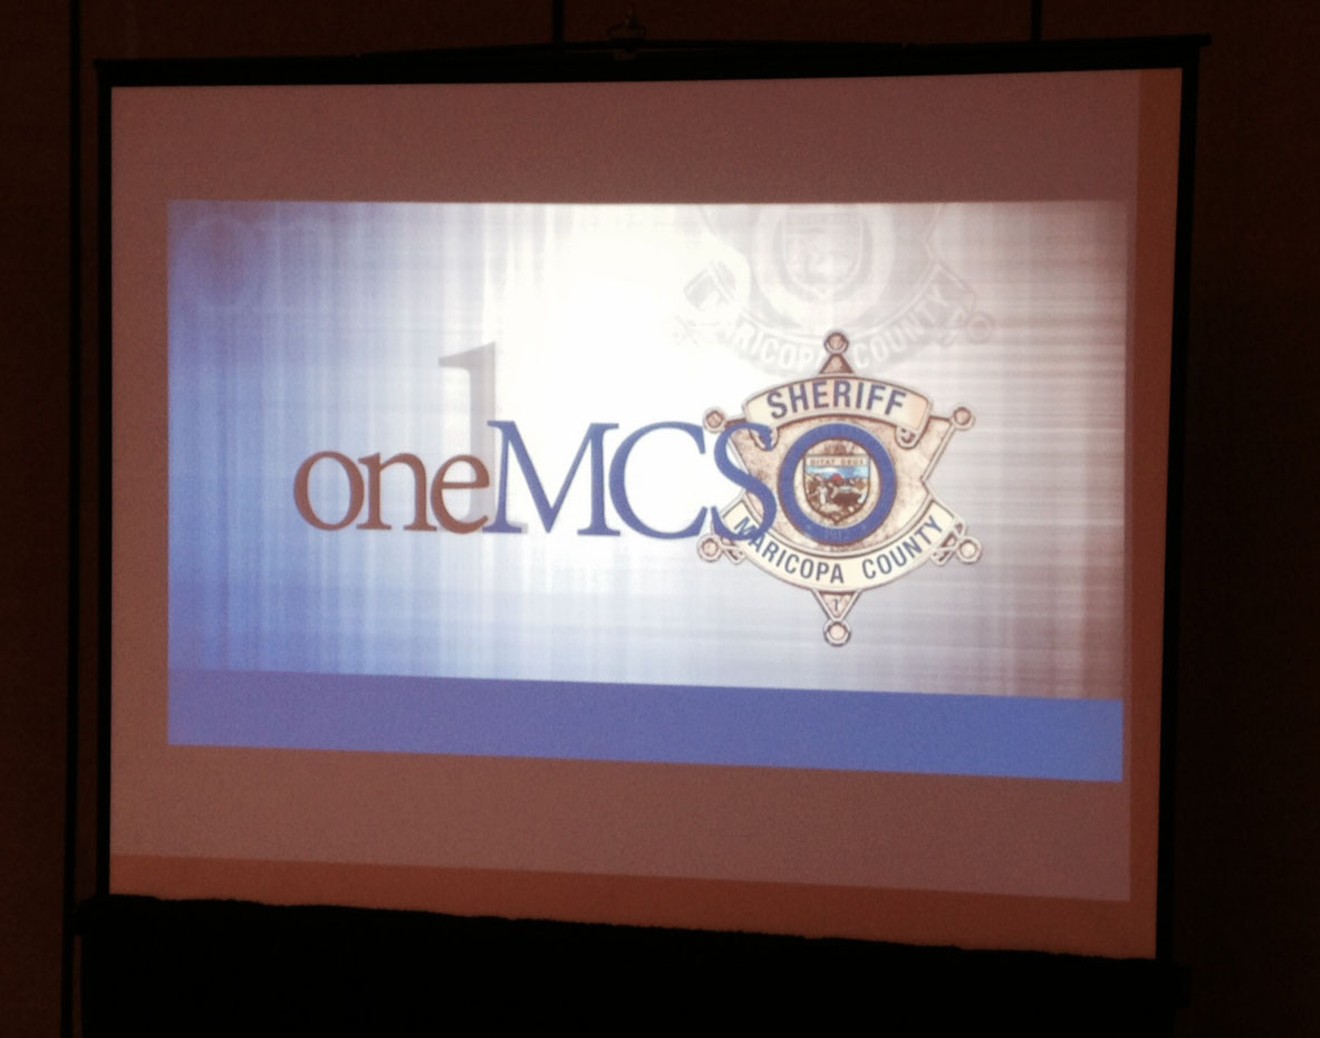 "OneMCSO" was the theme of Maricopa County Sheriff Paul Penzone's 100-day speech at Arizona Grand Resort on Wednesday, May 17, 2017.